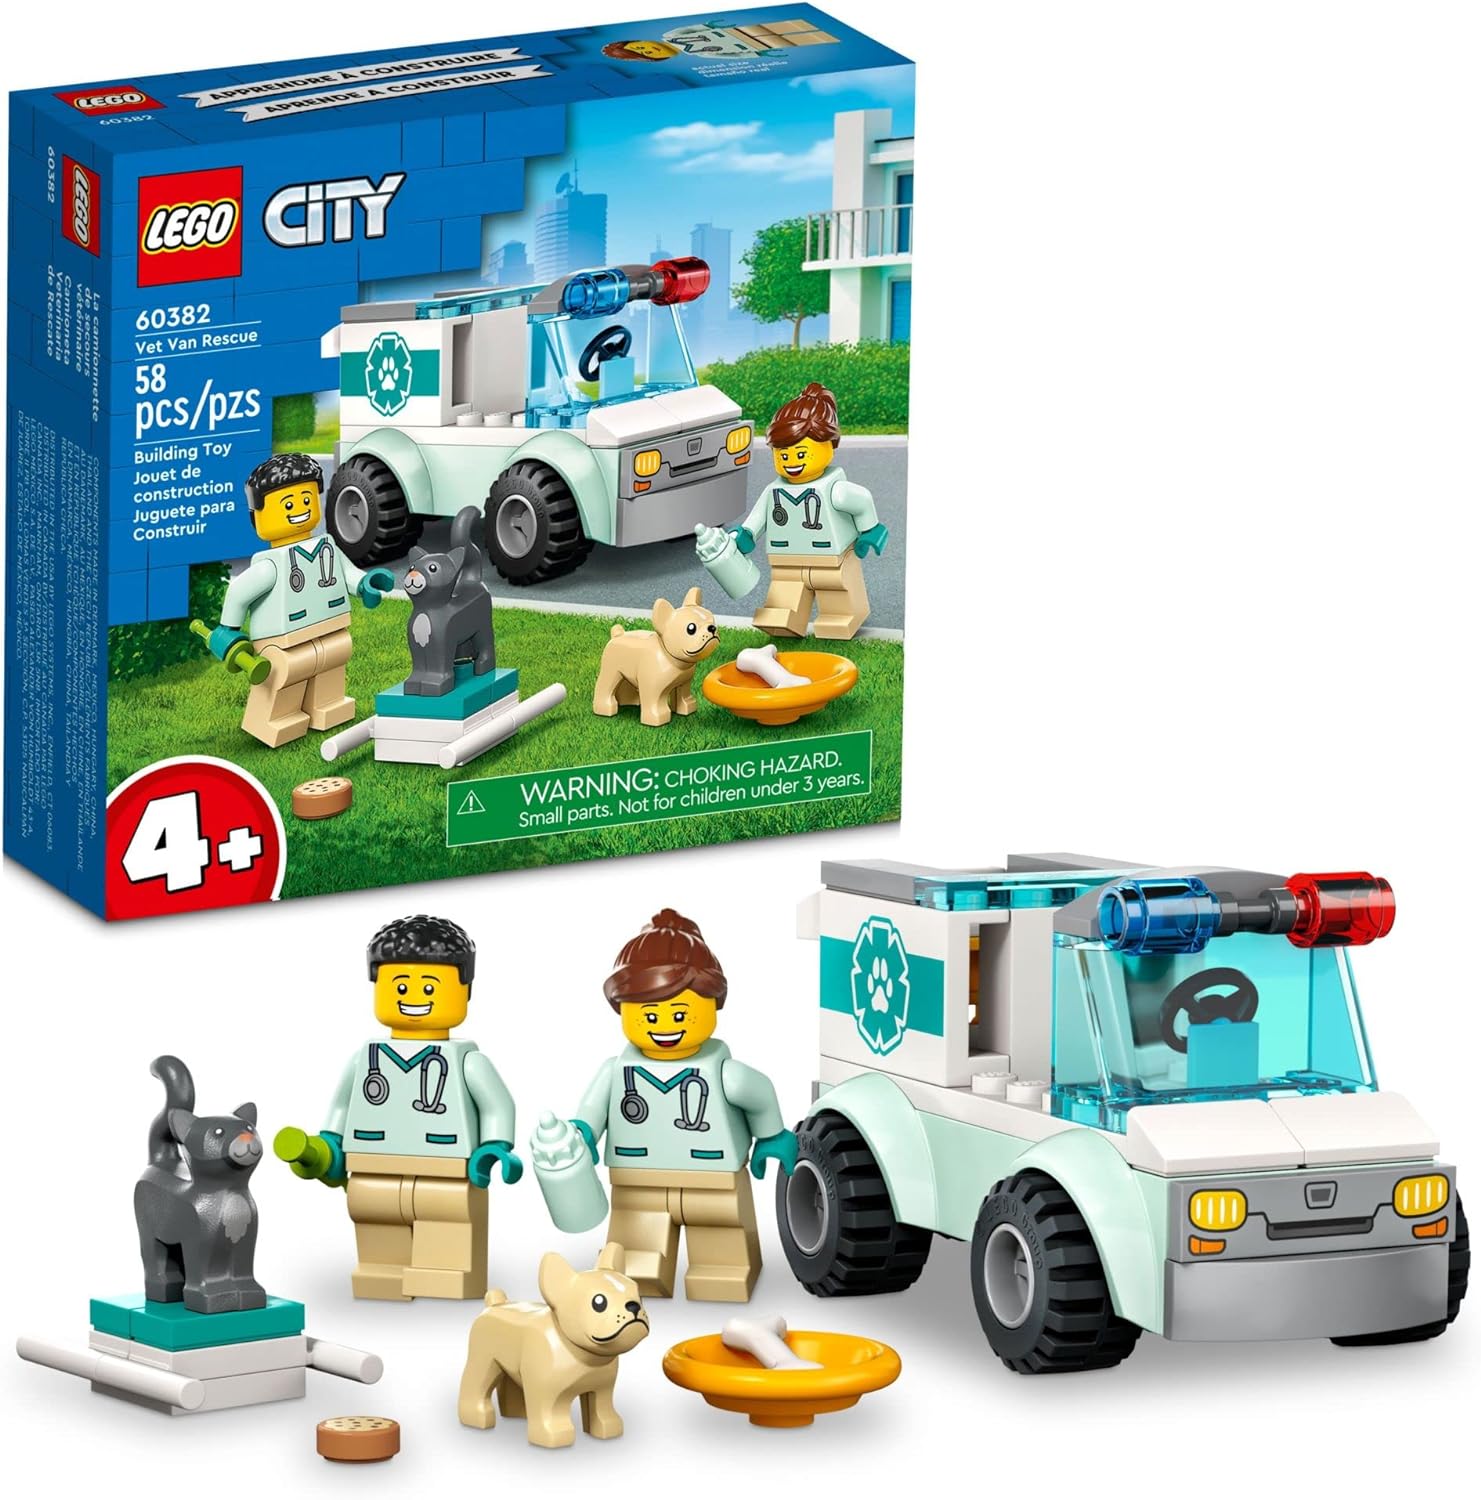 LEGO City Vet Van Rescue Building Kit – Only $7.99!